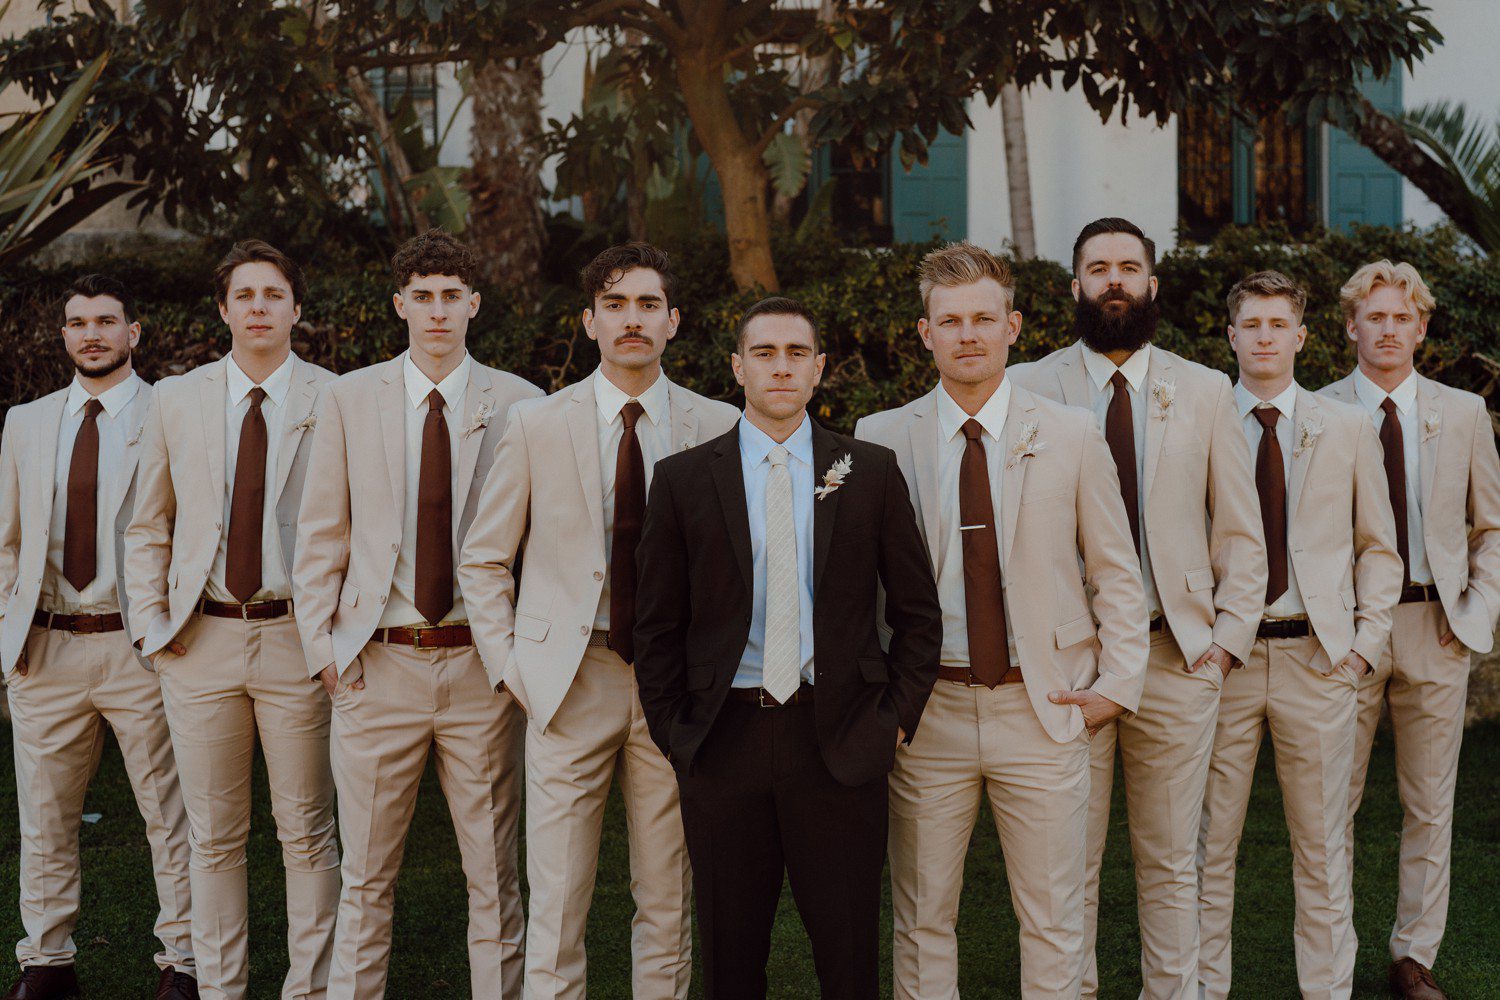 Groom and groomsmen photos at Santa Barbara courthouse 